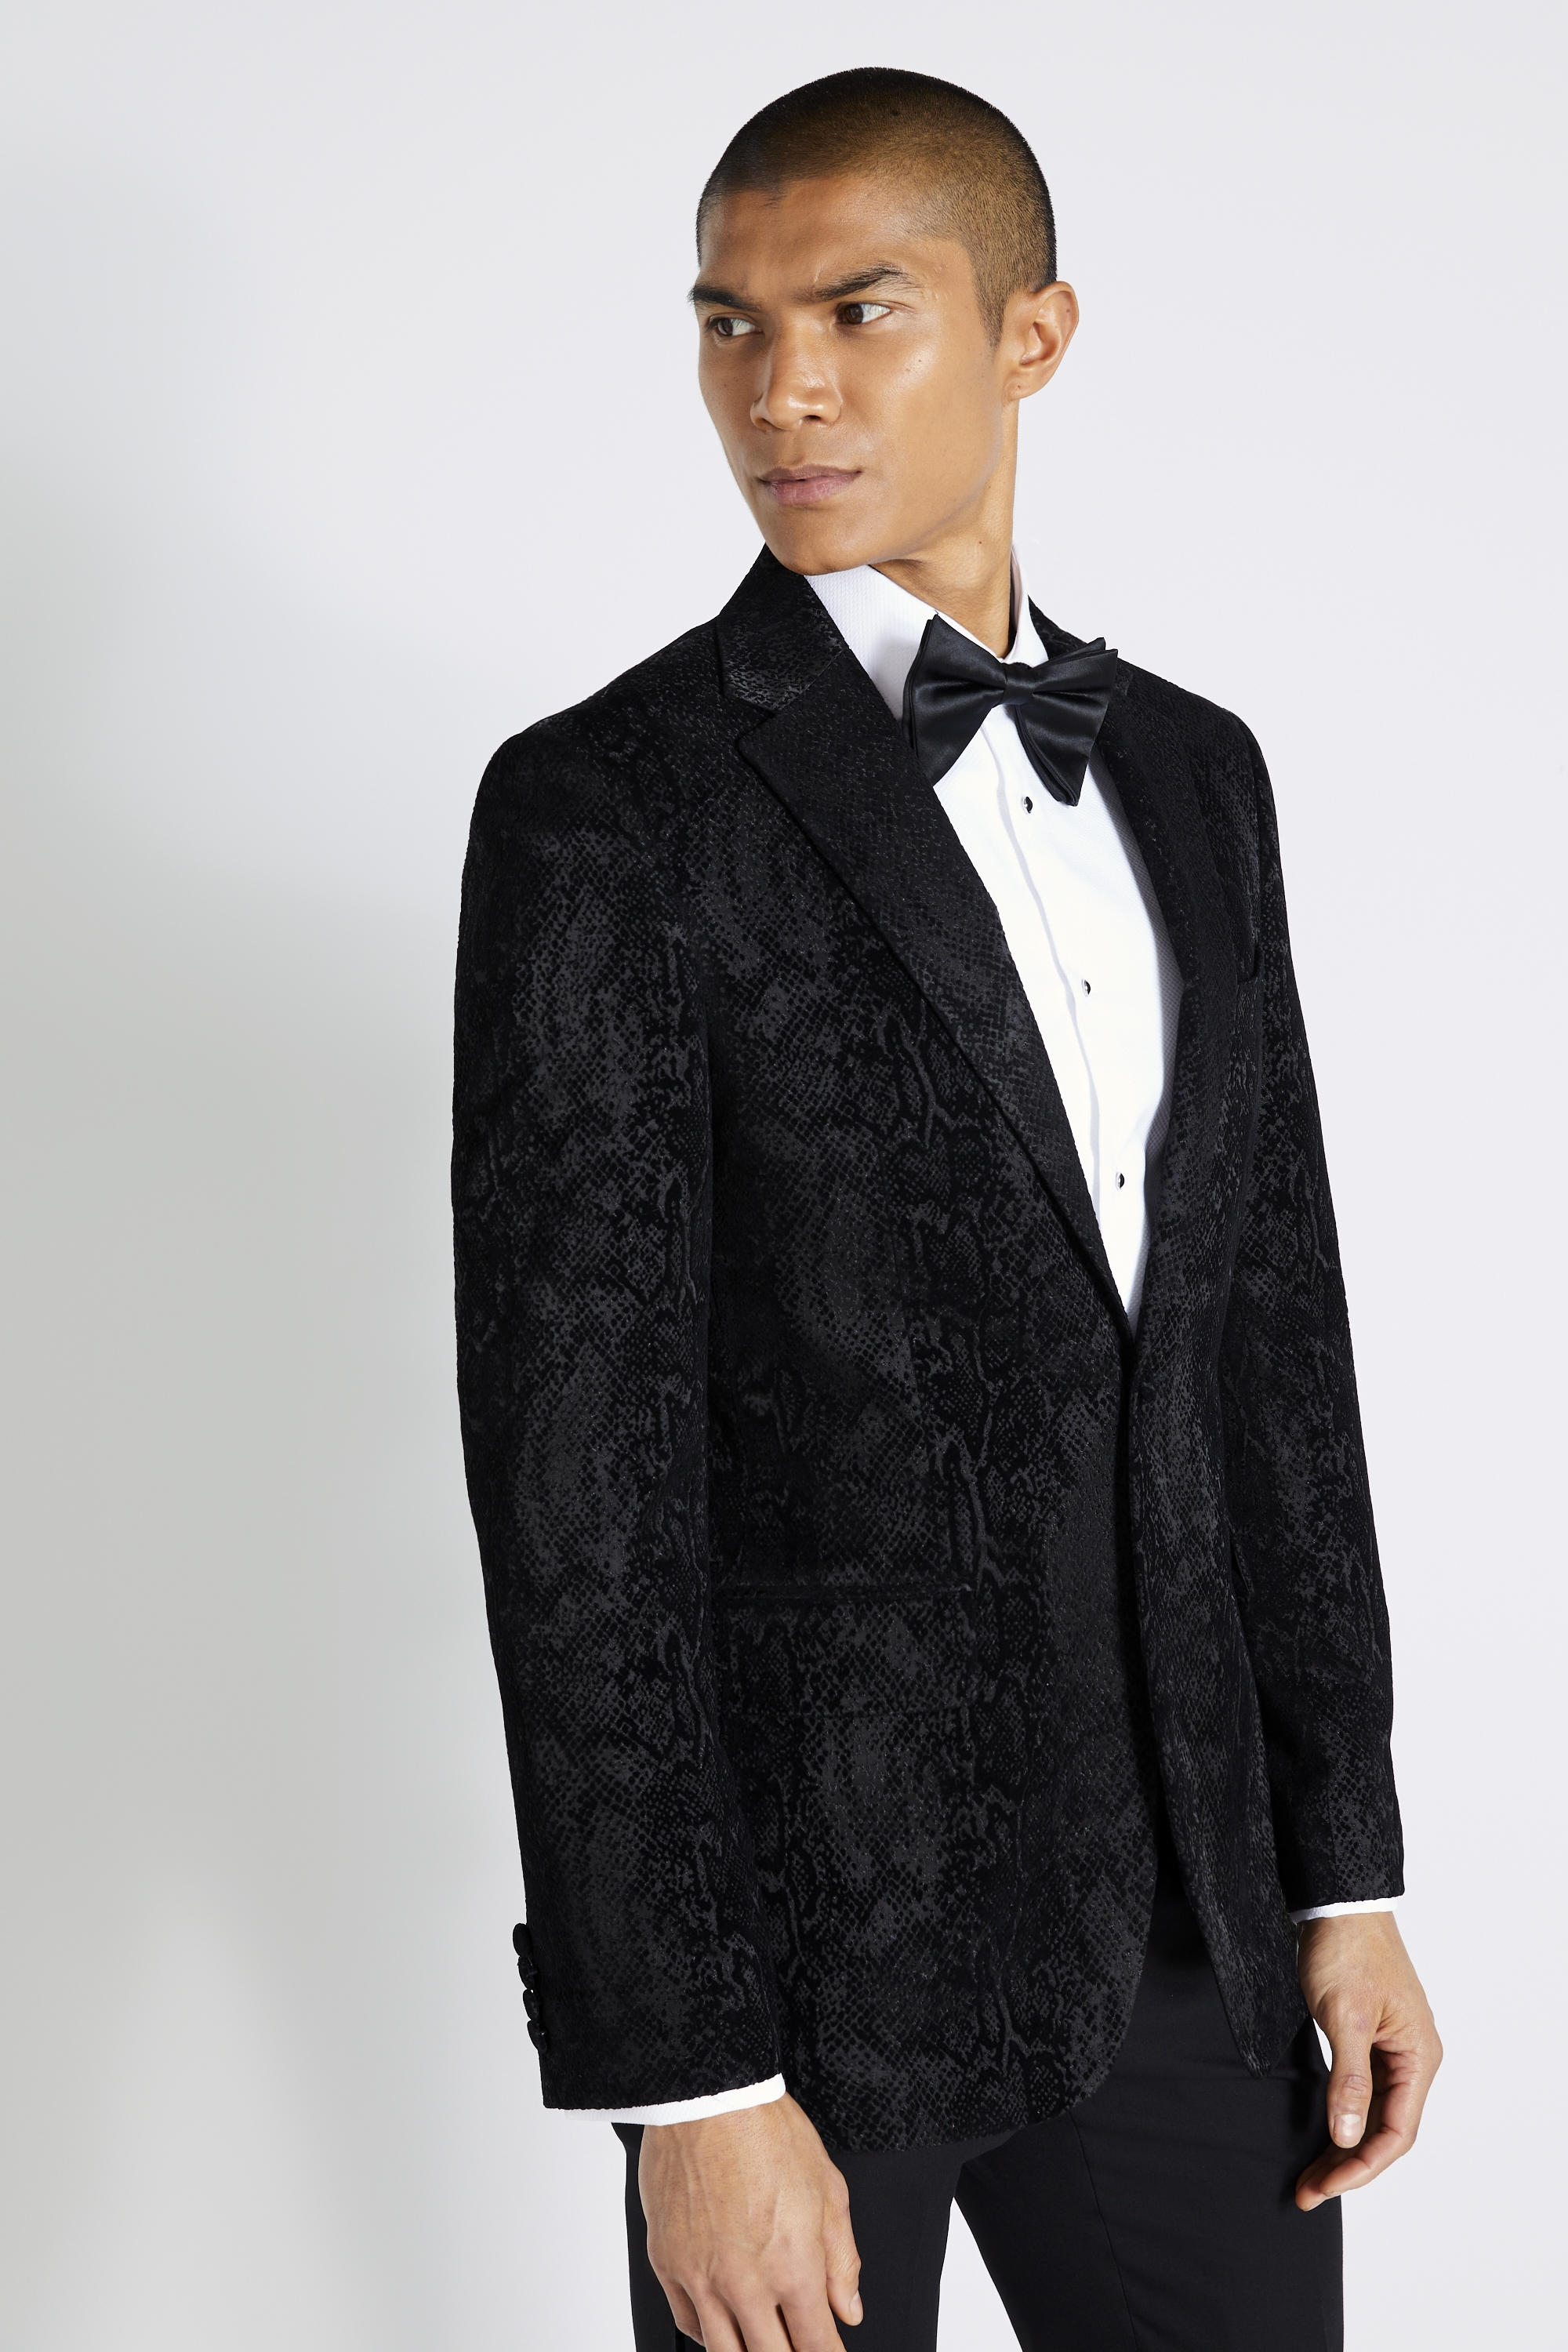 Slim Fit Black Flocked Tuxedo Jacket | Buy Online at Moss